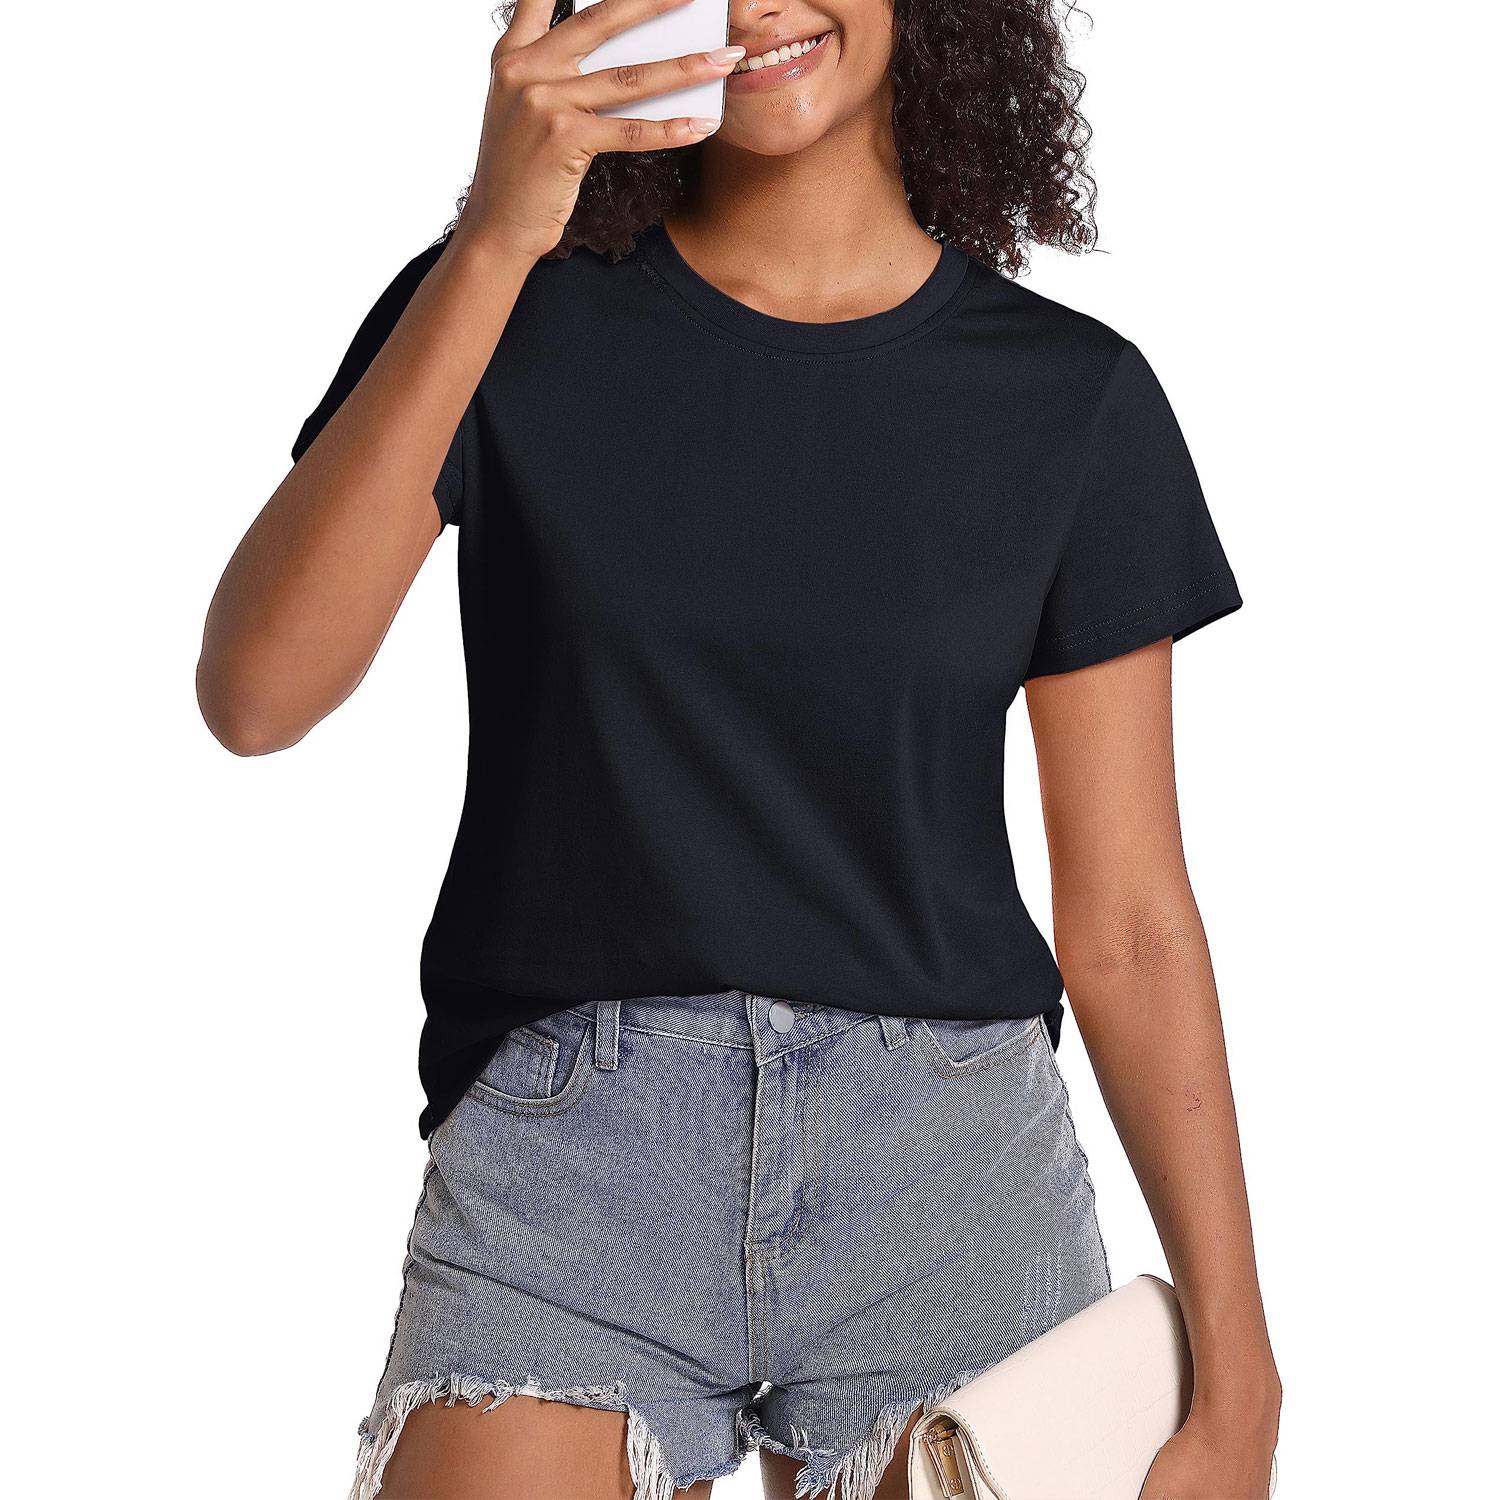 LIKE SHOP Camiseta Pabilo Reductora Mujer Faja Nylon Compresión Bretel.  1000